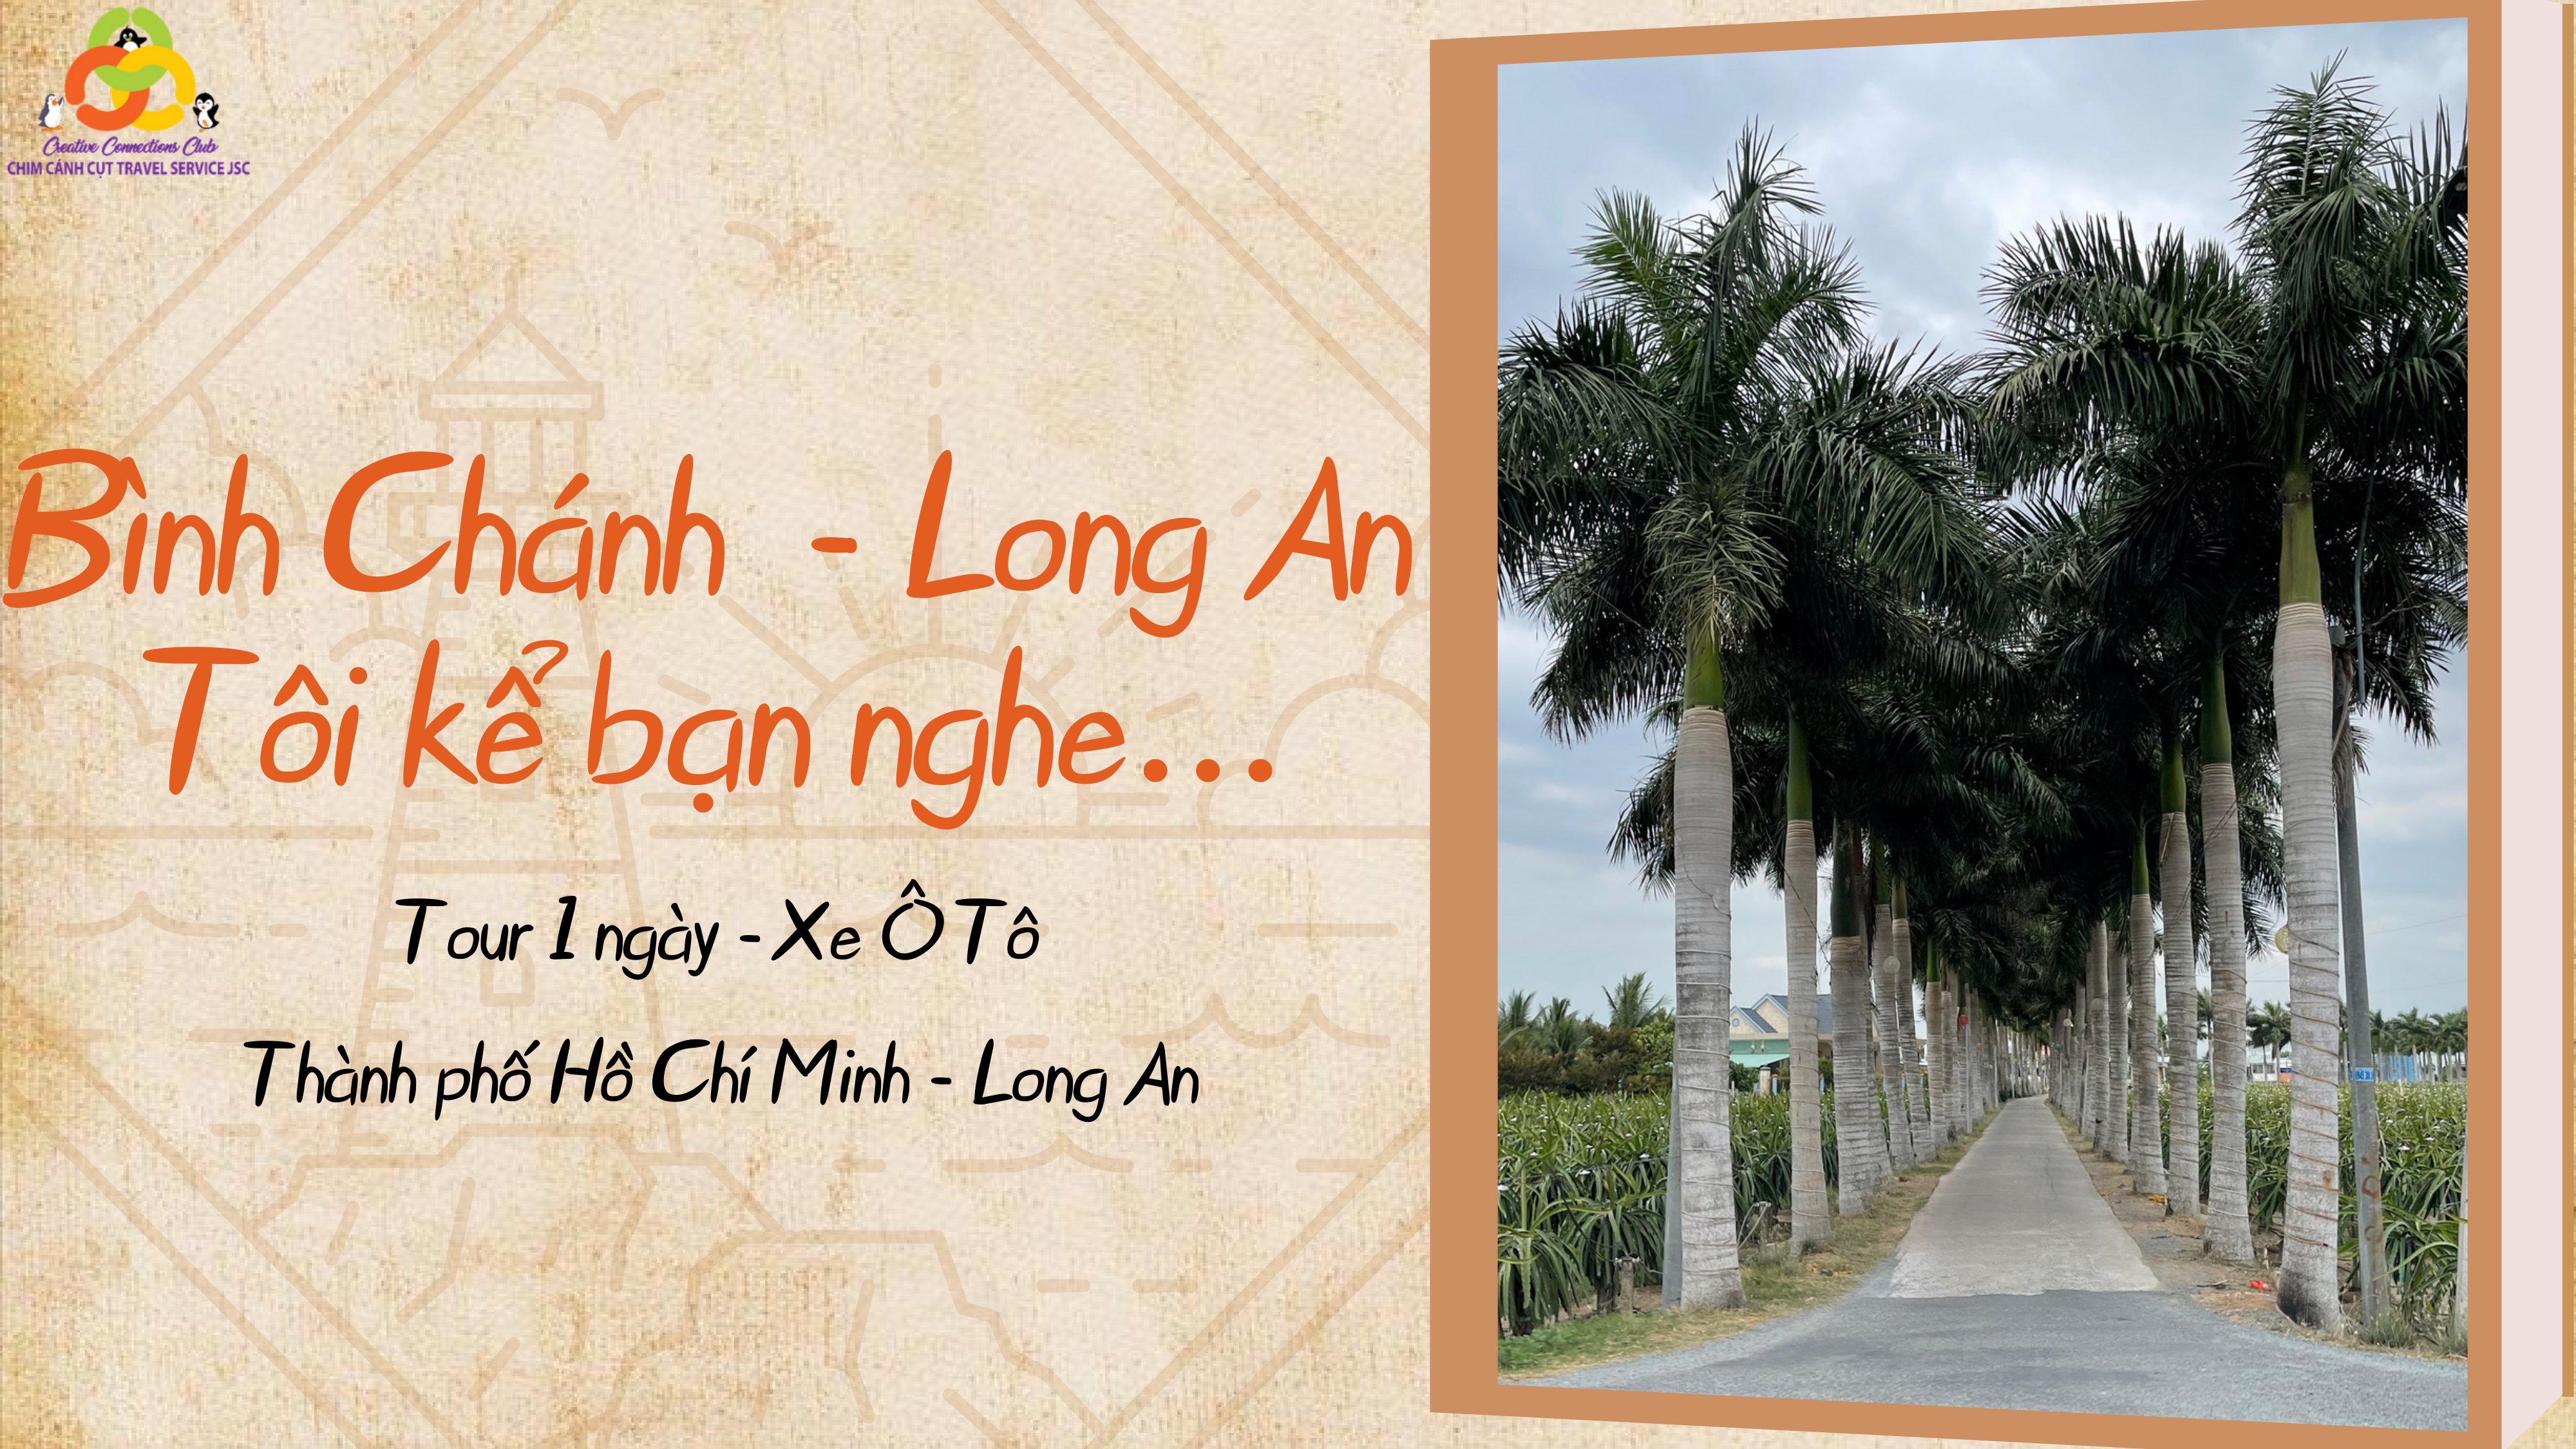 Binh Chanh - Long An I tell you the story...